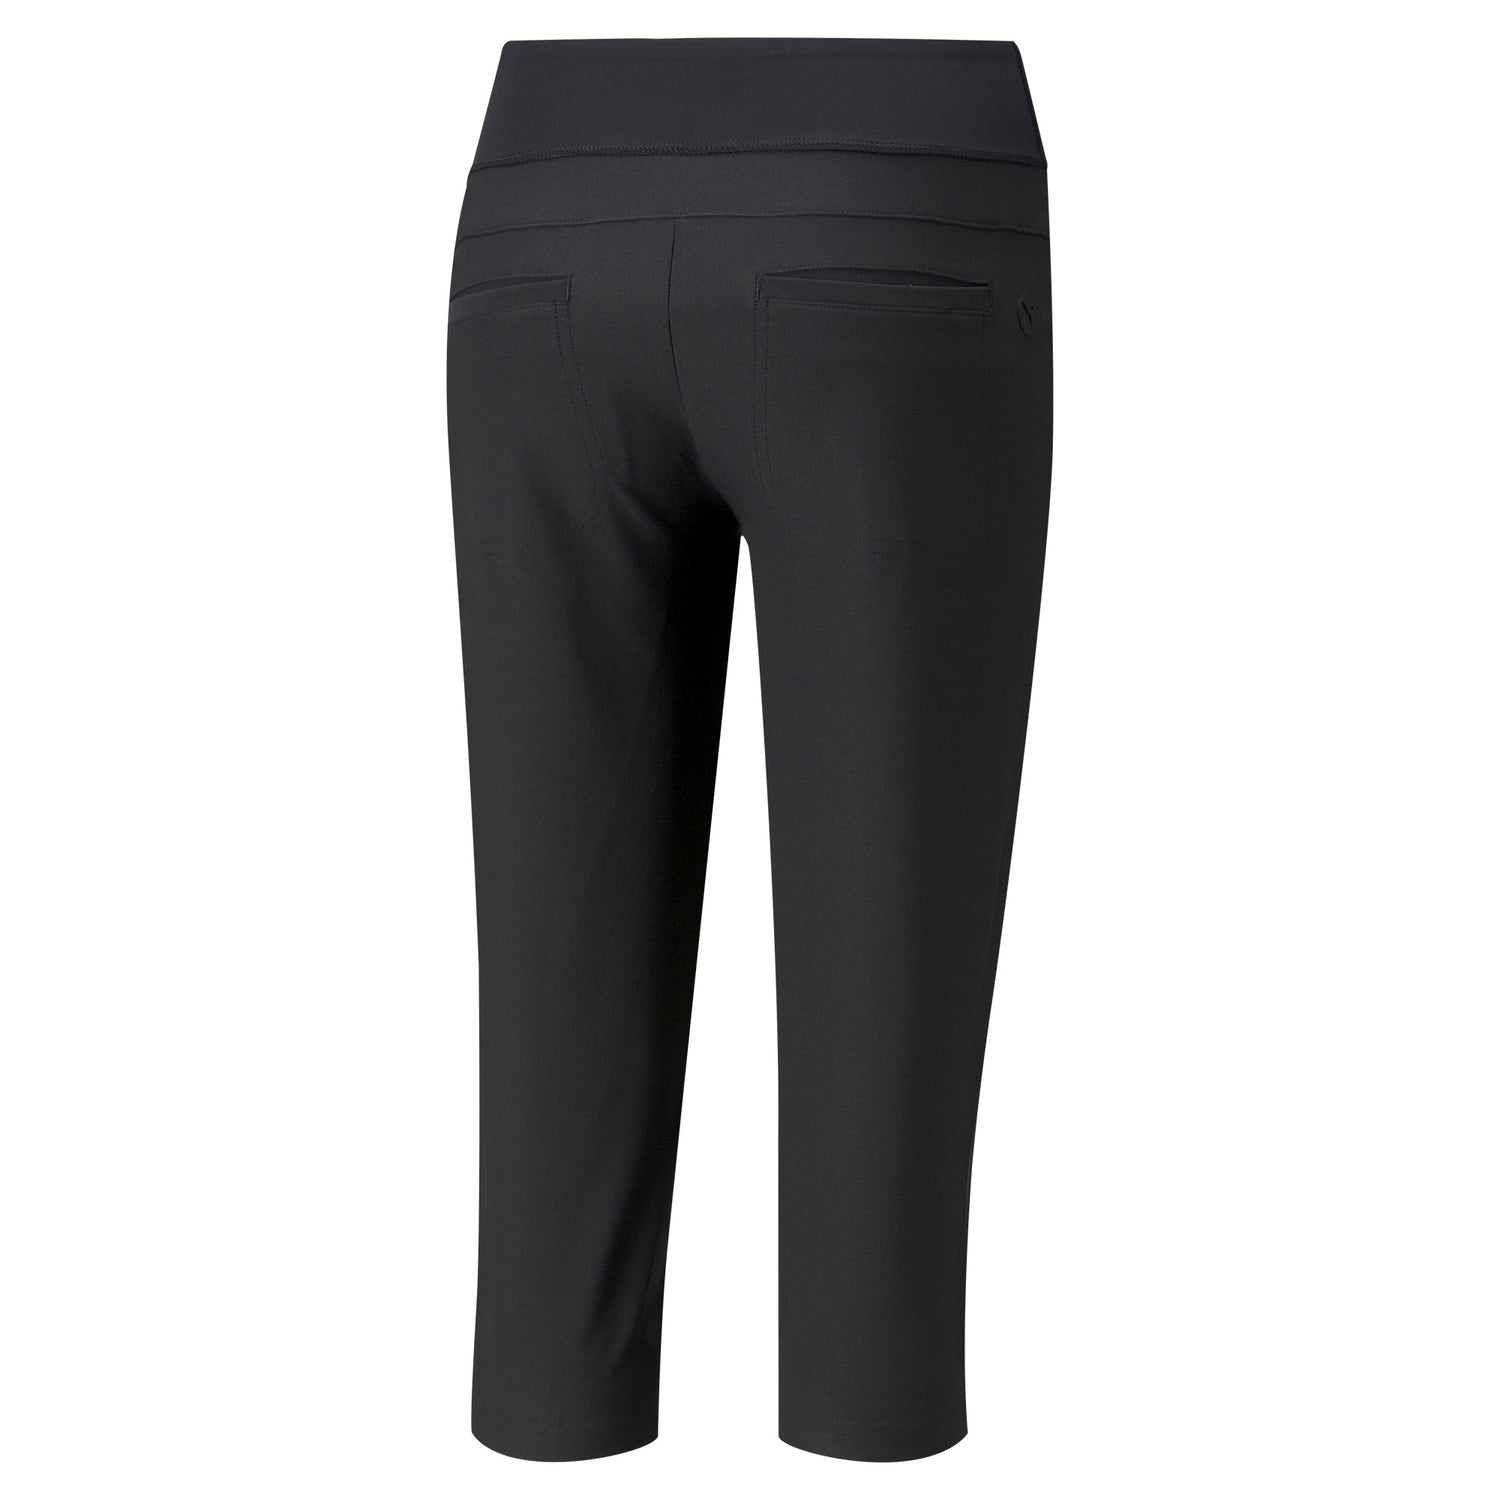 Tuna London Capri Length Track Pants For Women - Black